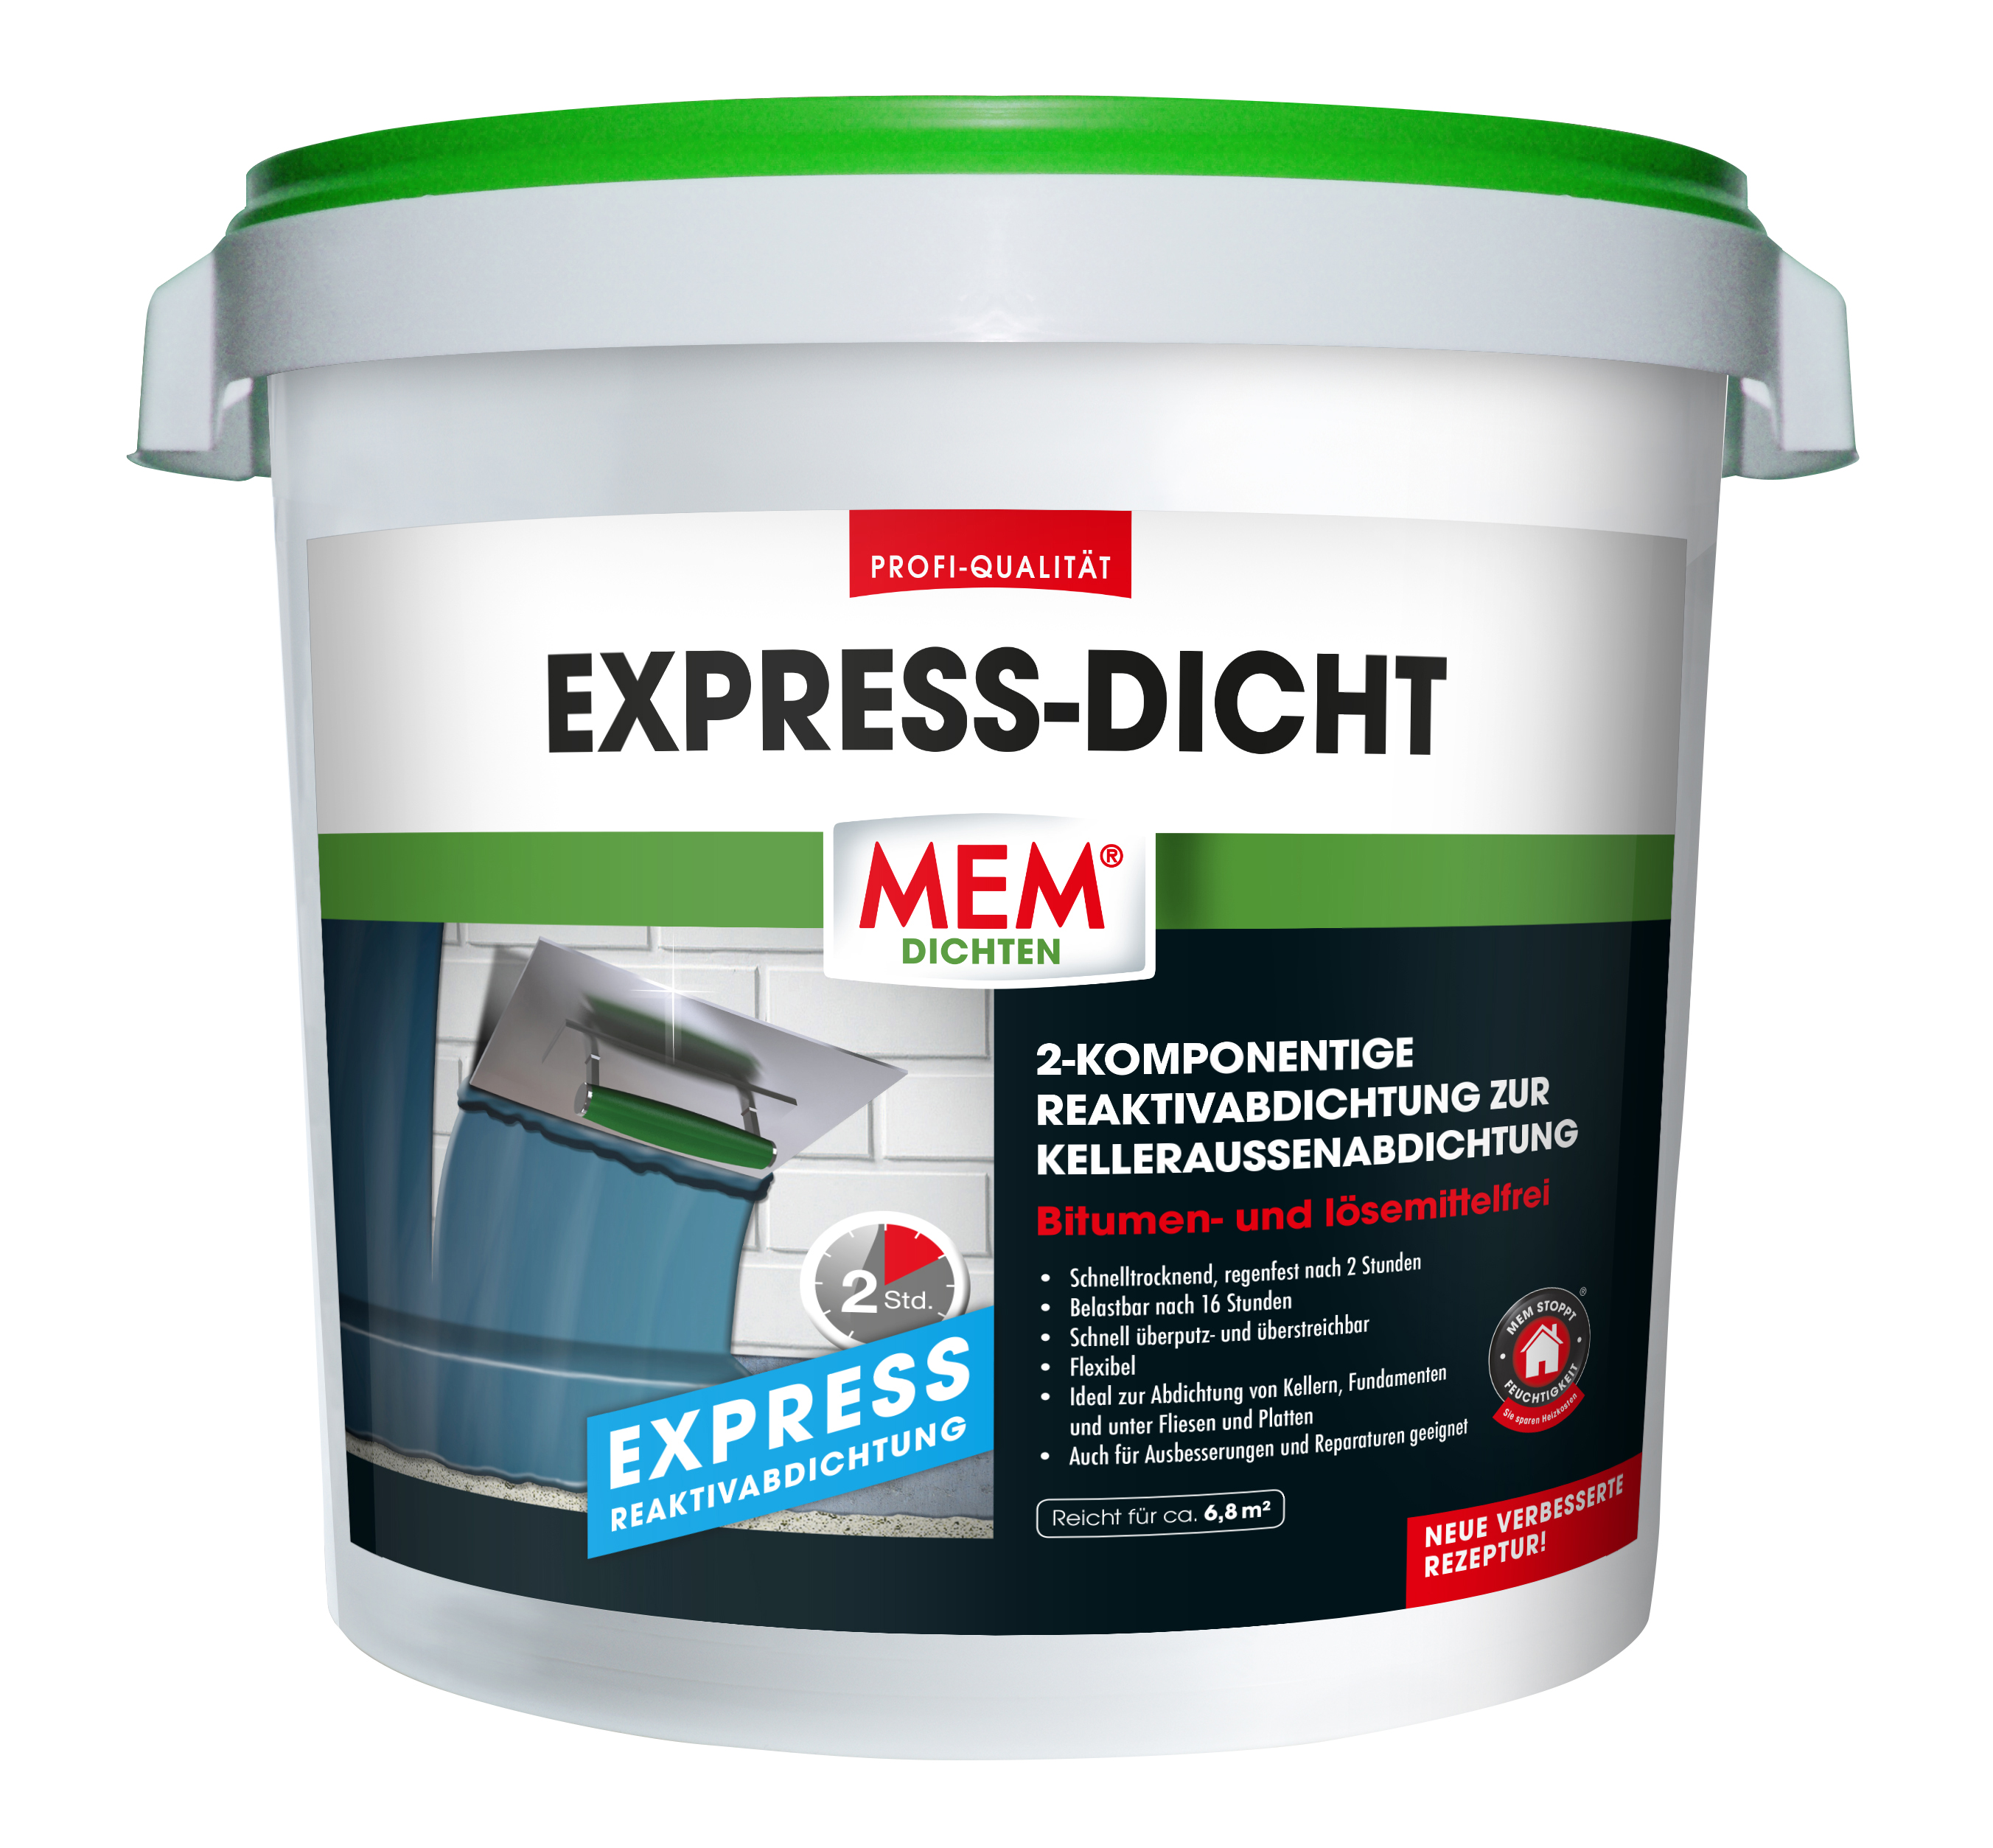 MEM Express-Dicht 25 kg